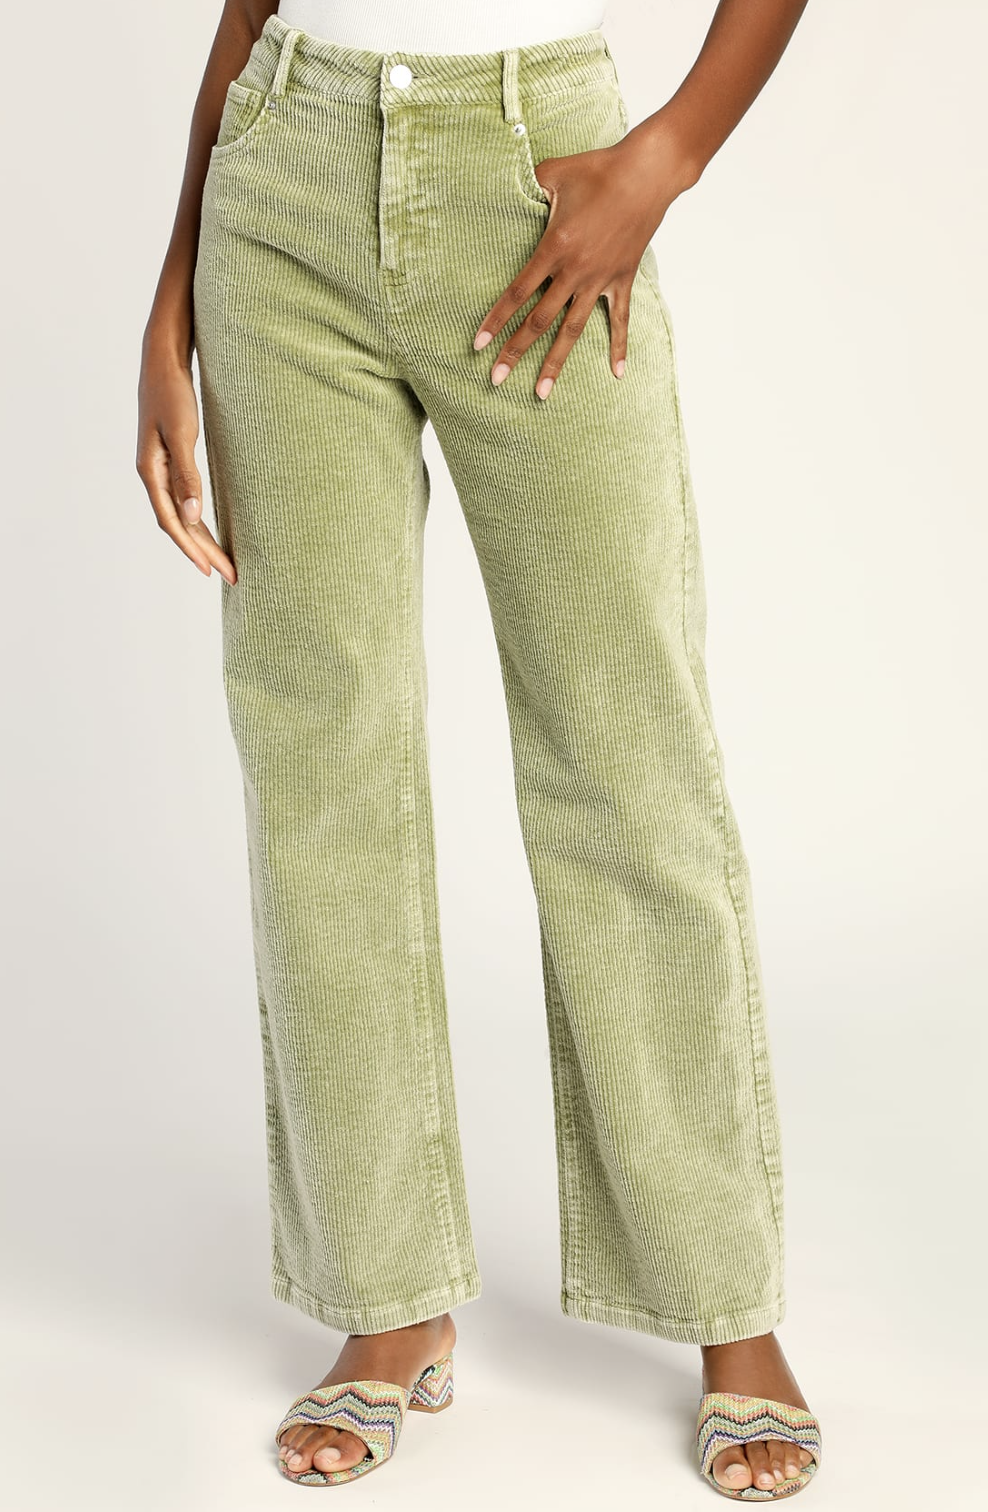 model wearing the light green pants